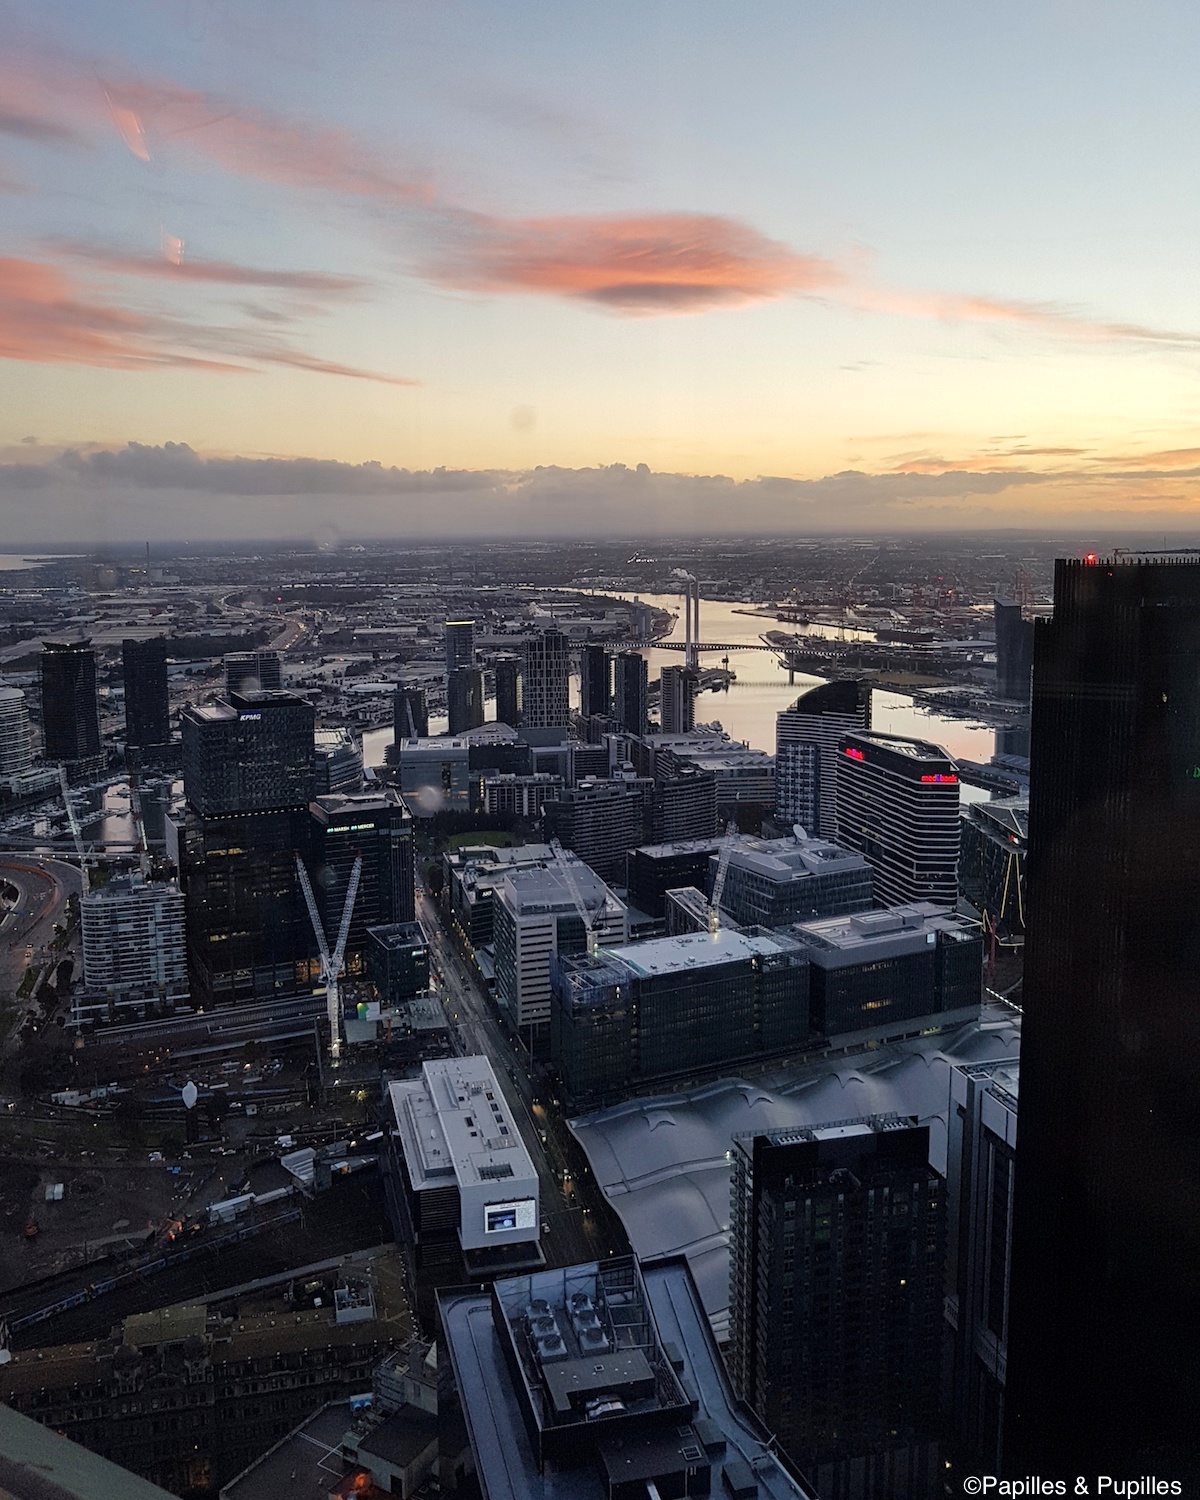 Sunset - Melbourne